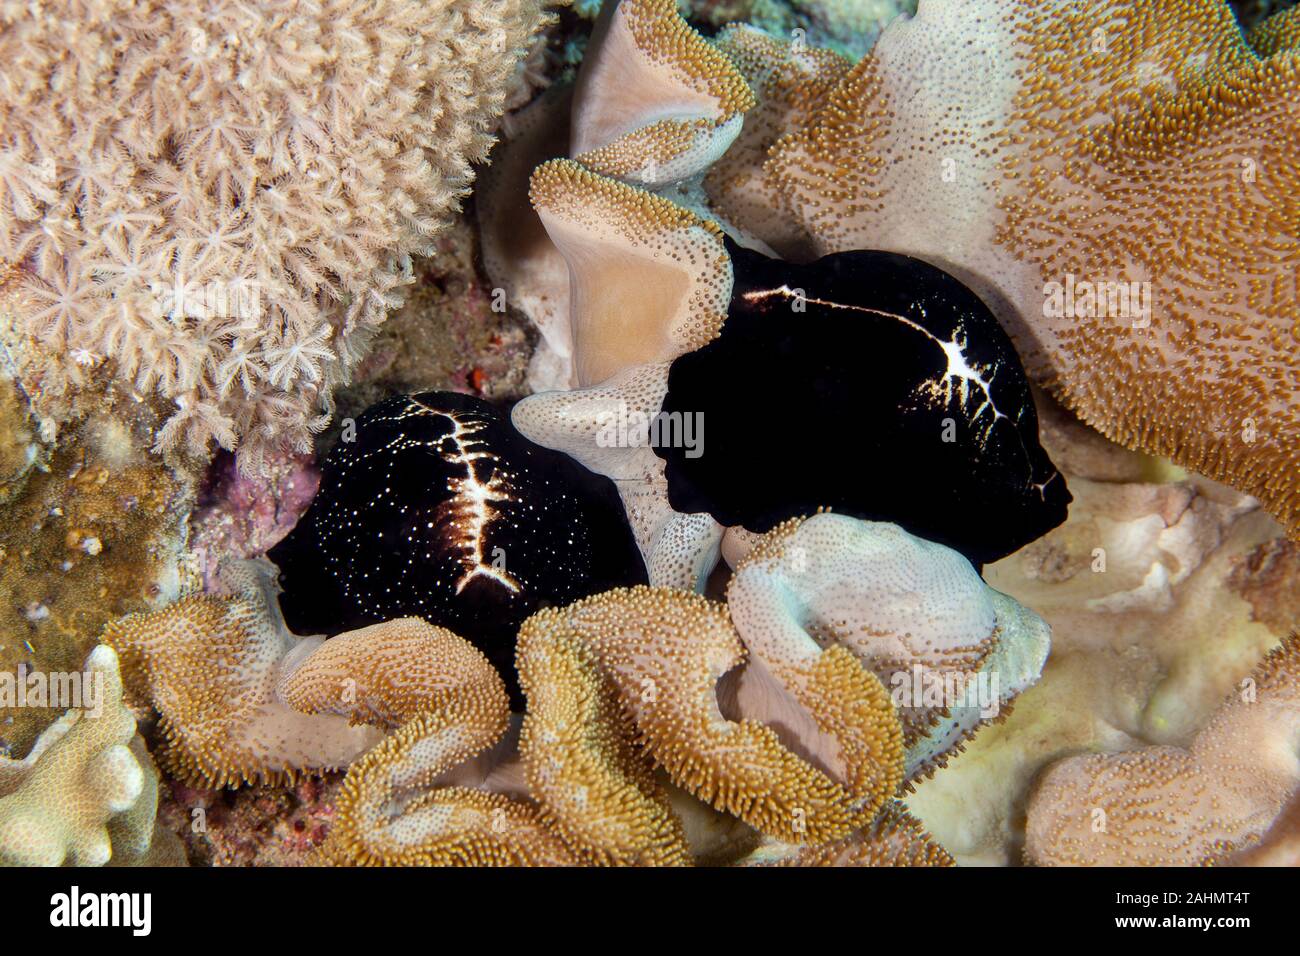 Ovula ovum Cypraeidae cowry sea snails Stock Photo